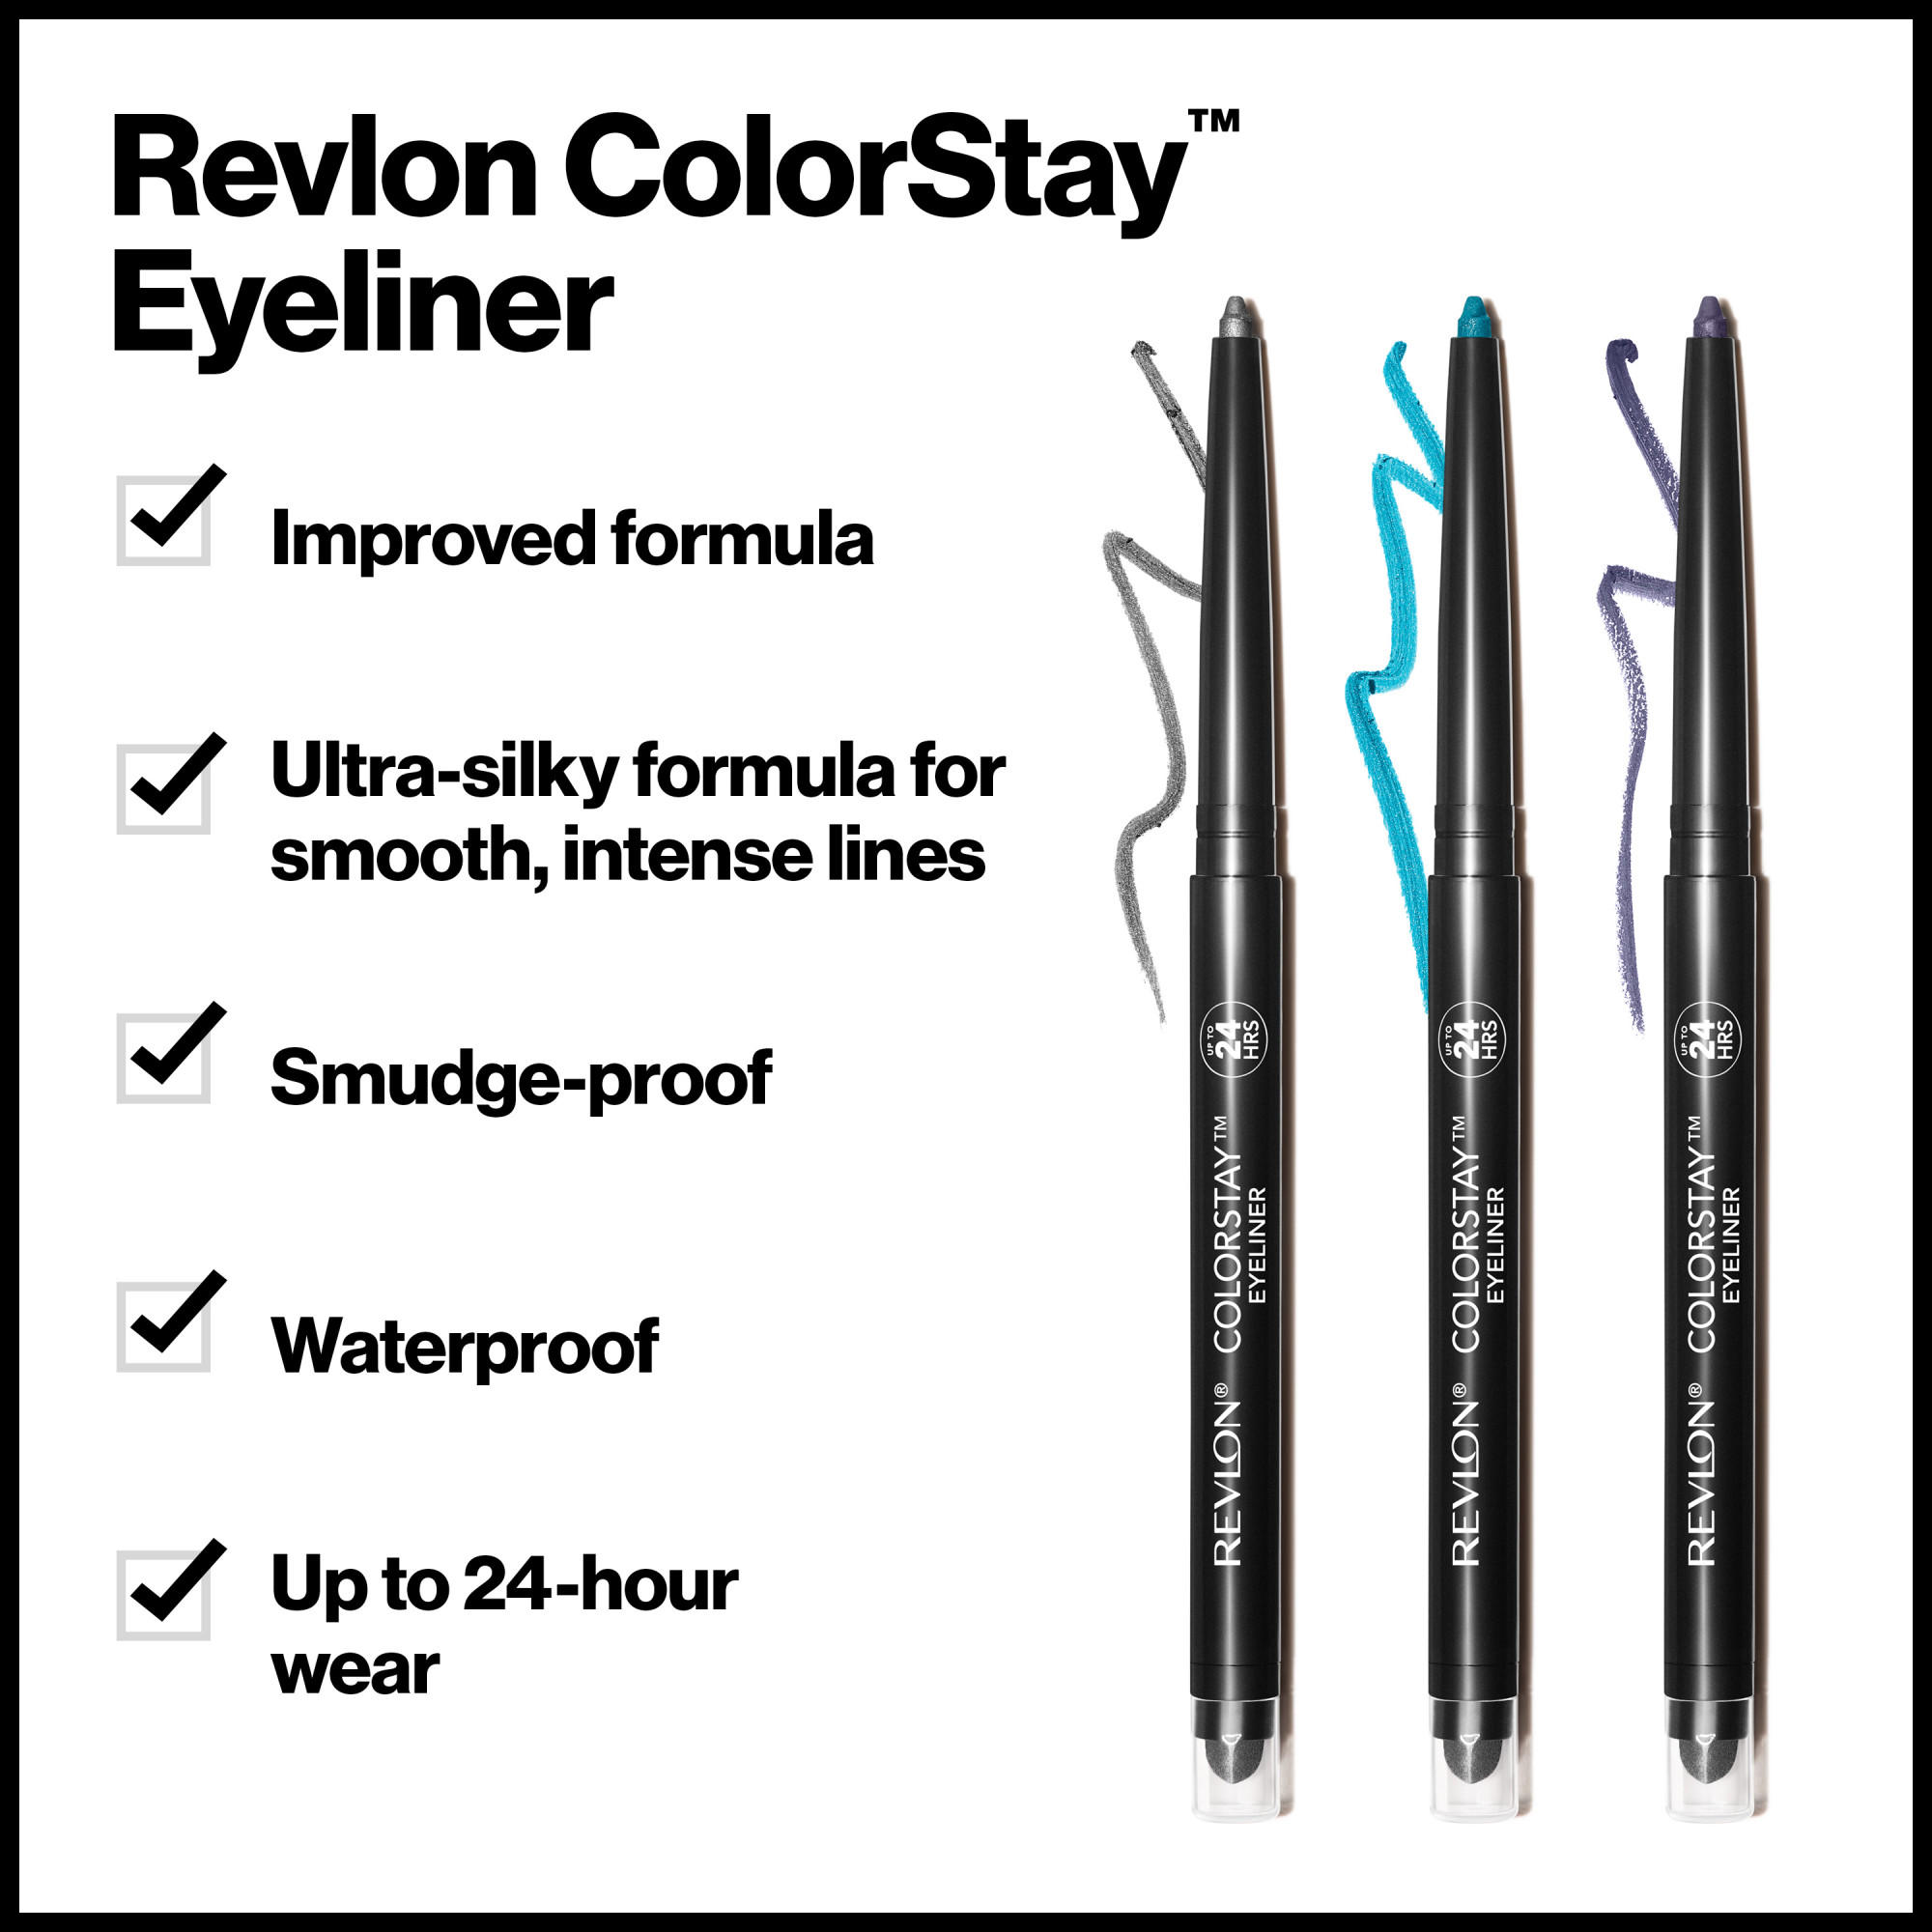 Revlon ColorStay Waterproof Eyeliner Pencil, 24HR Wear, Built-in Sharpener, 209 Black Violet, 0.01 oz - image 5 of 10